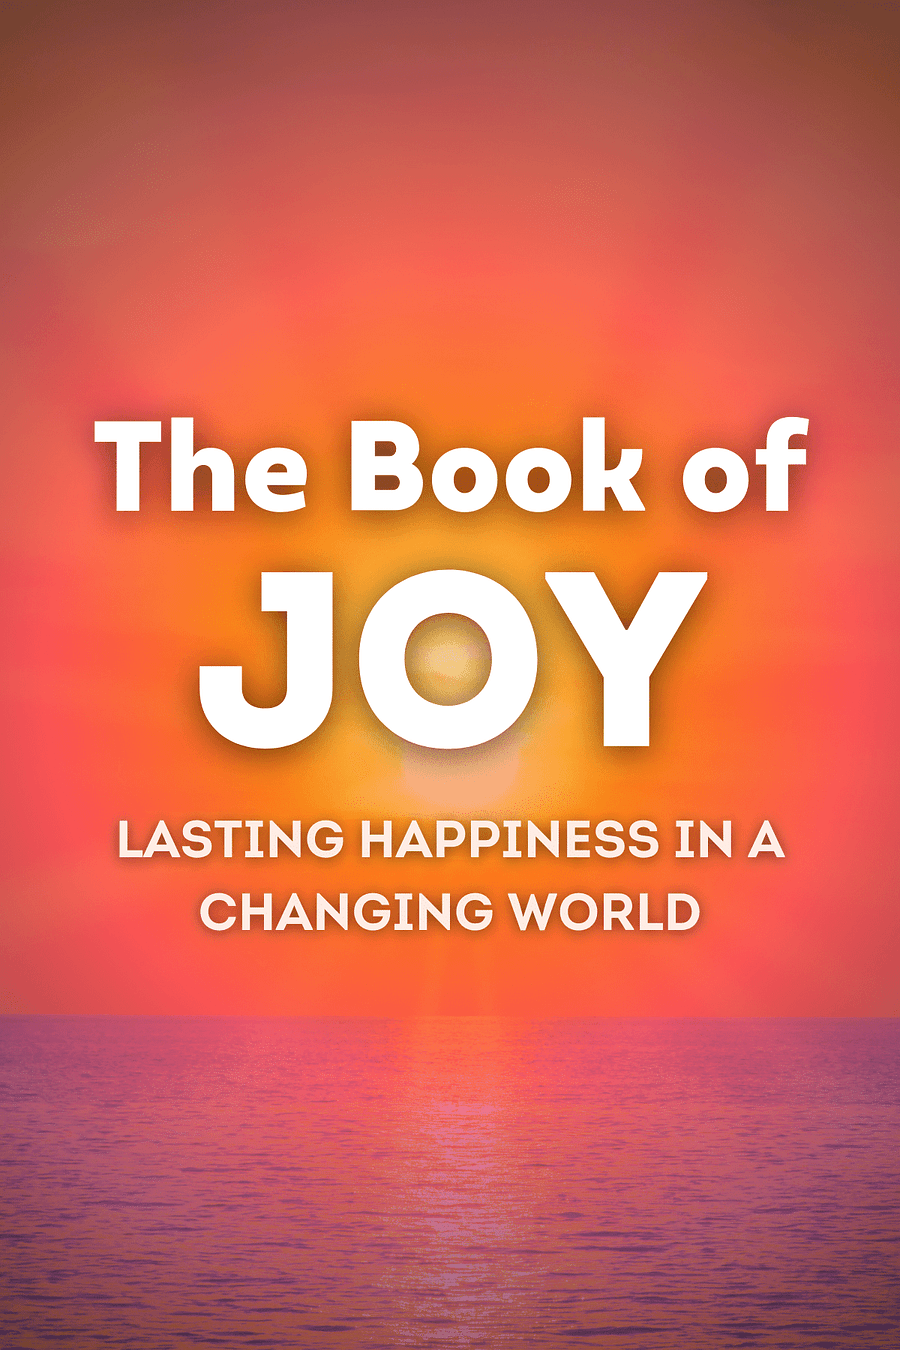 The Book of Joy by Dalai Lama, Desmond Tutu, Douglas Carlton Abrams - Book Summary